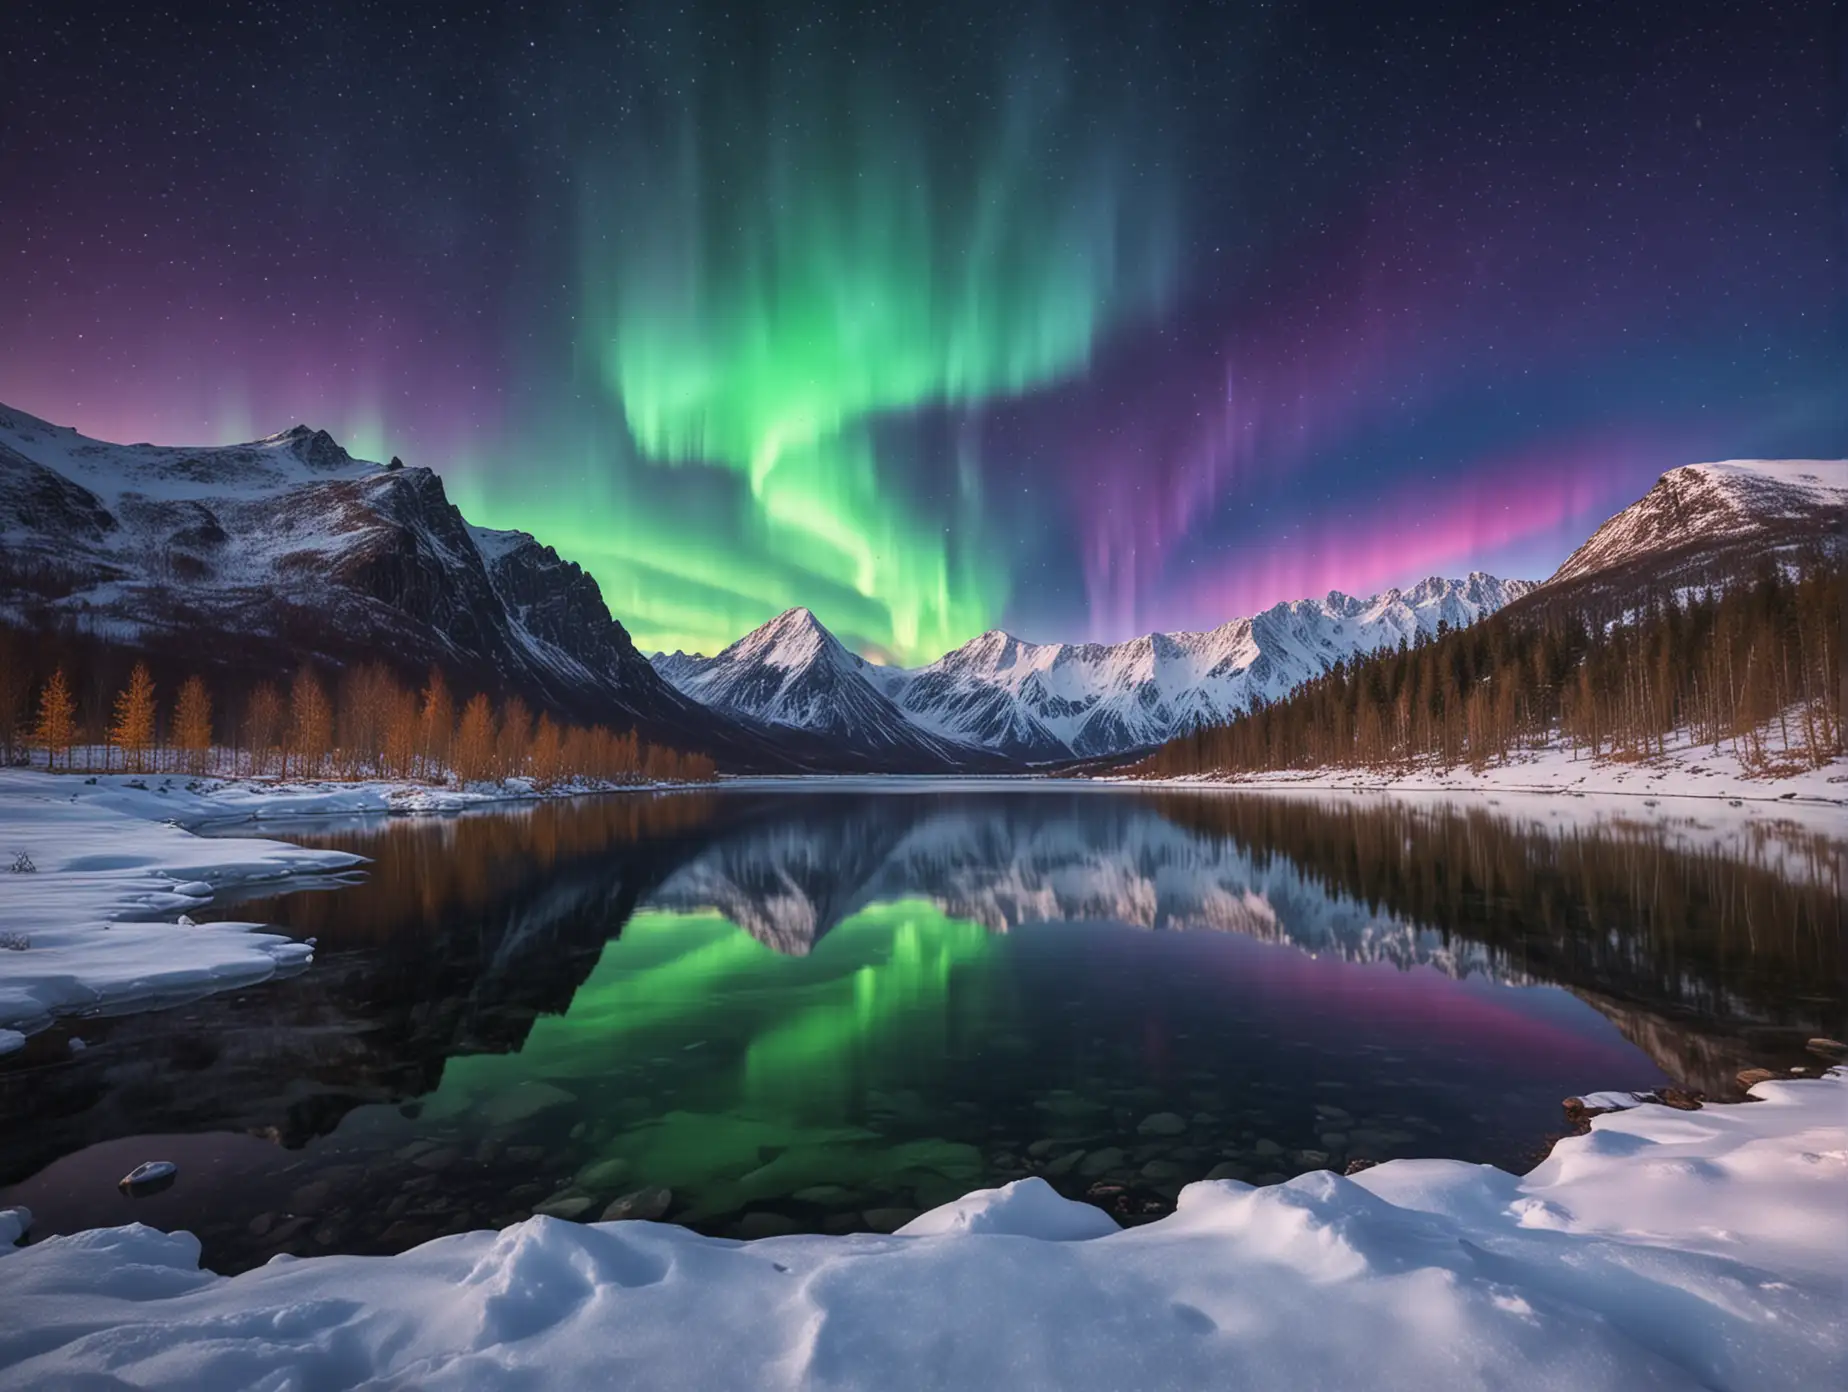 Vibrant Aurora Borealis Dancing Above Snowy Mountains and Lake